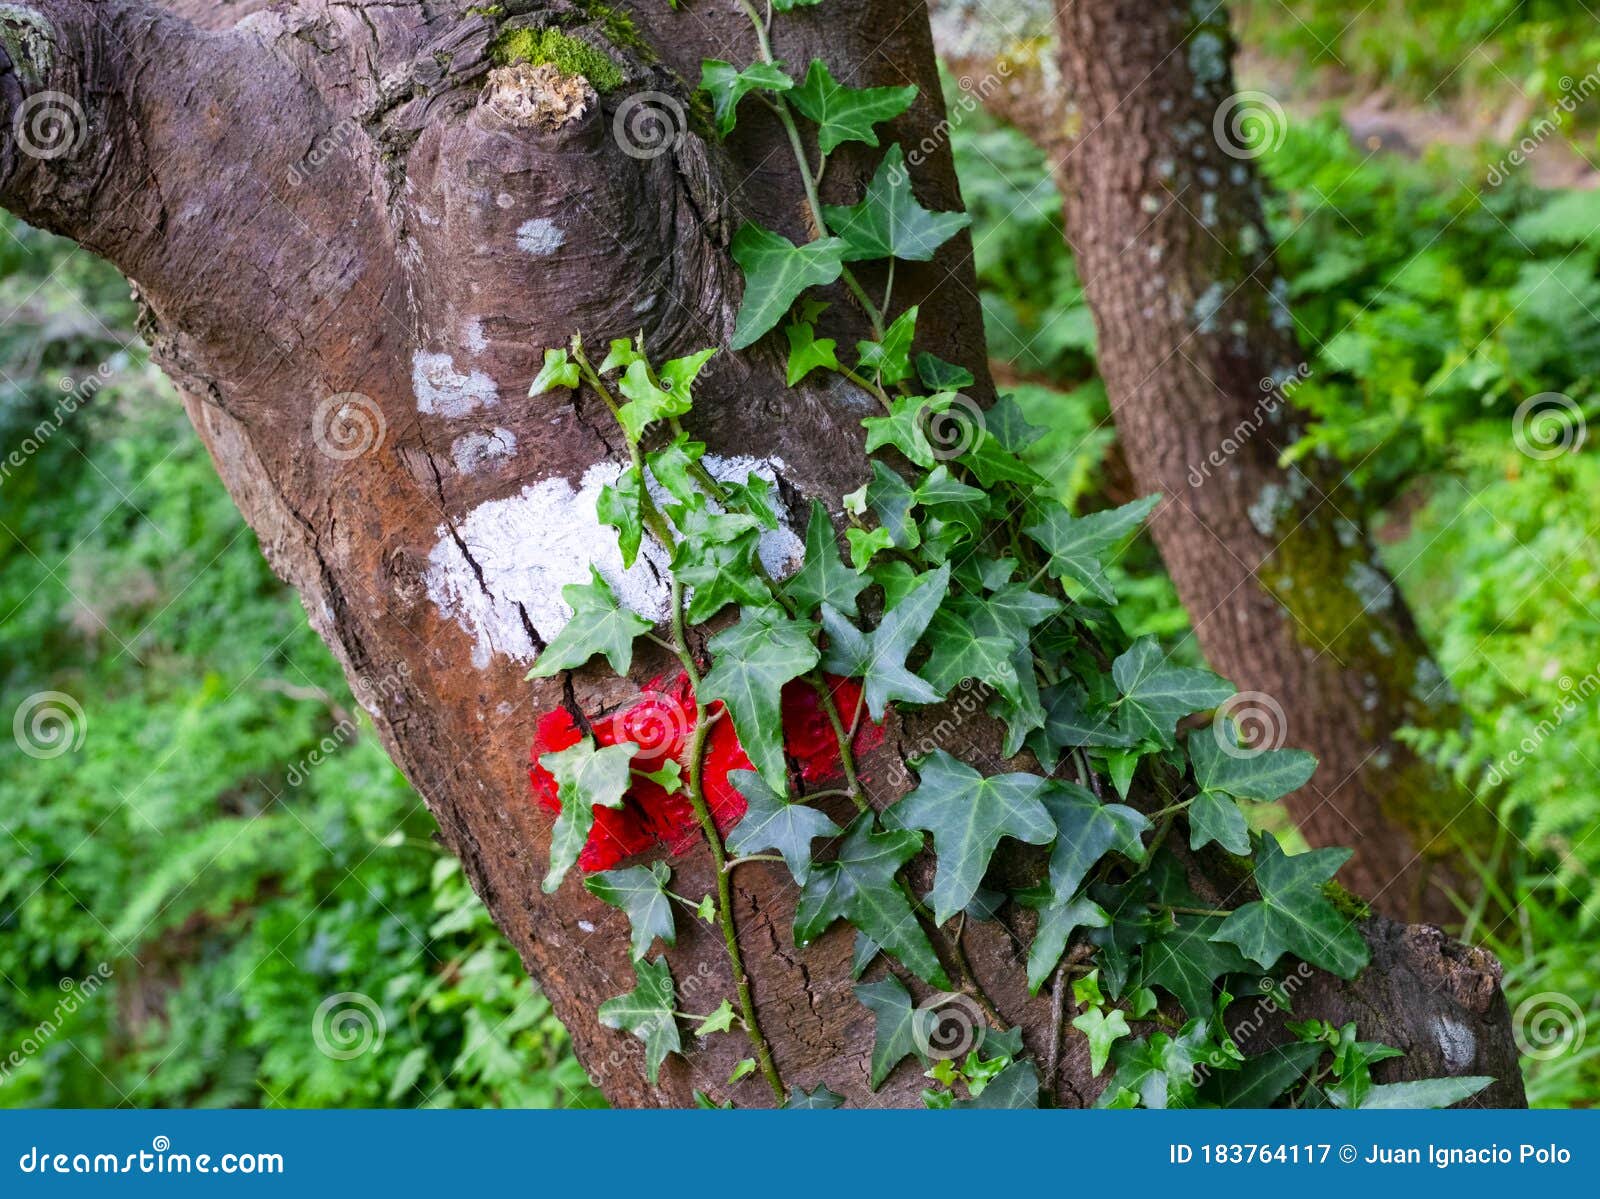 gr footpath on a tree among the ivy, hiking on mount ulia, euskadi